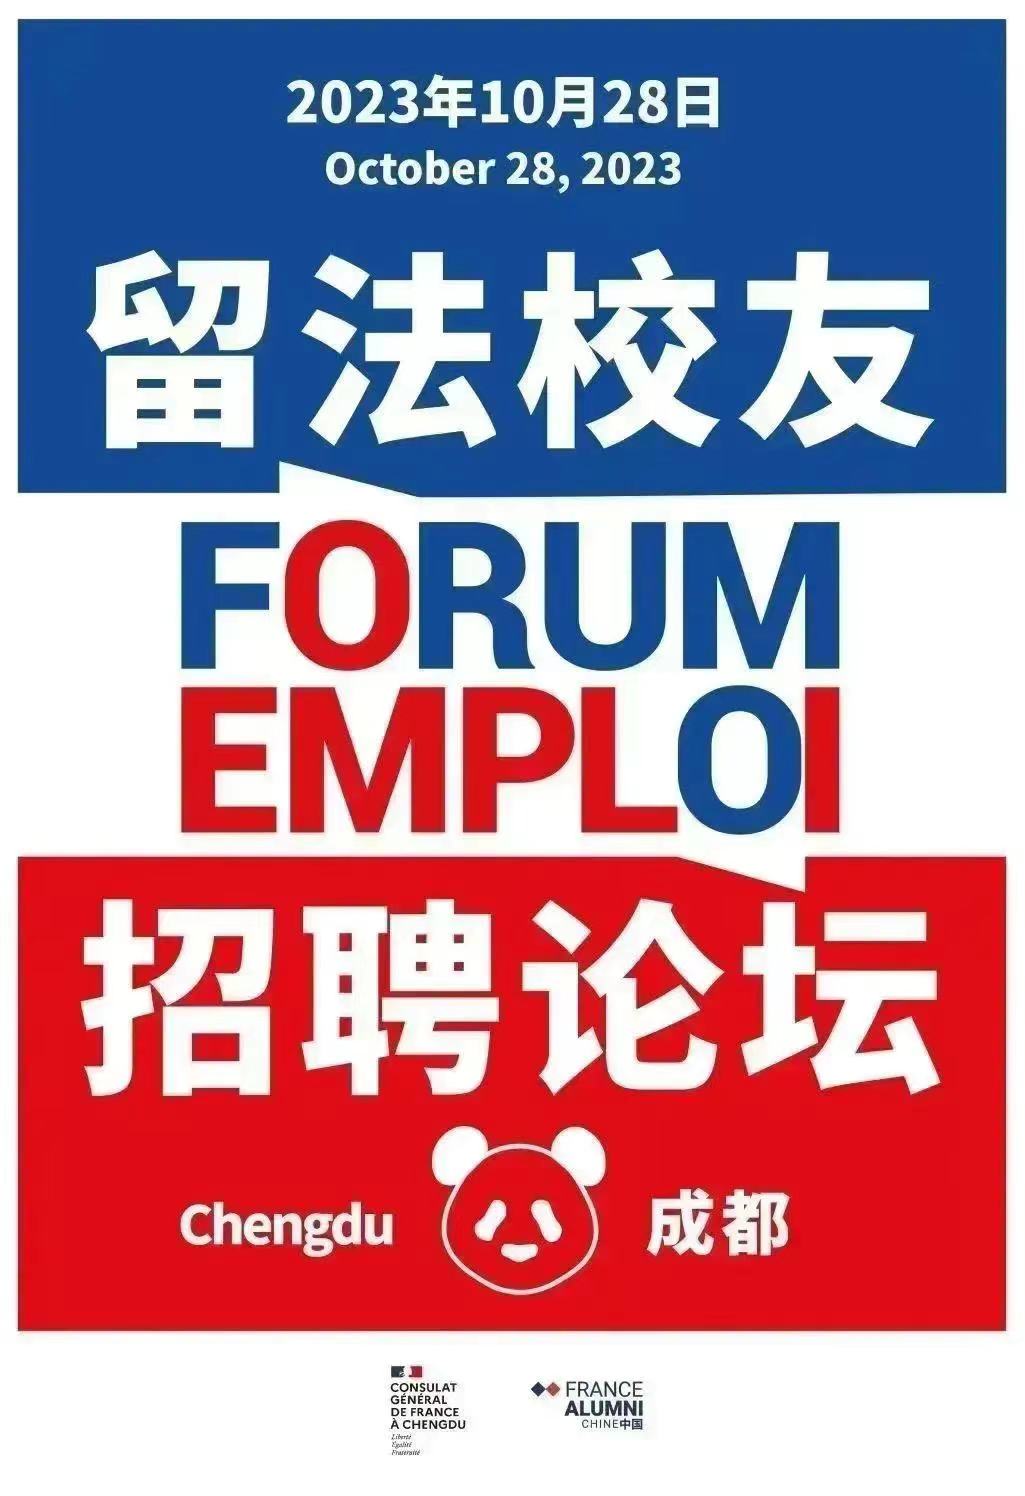 2023 Forum Emploi Chengdu chengdu expat 1